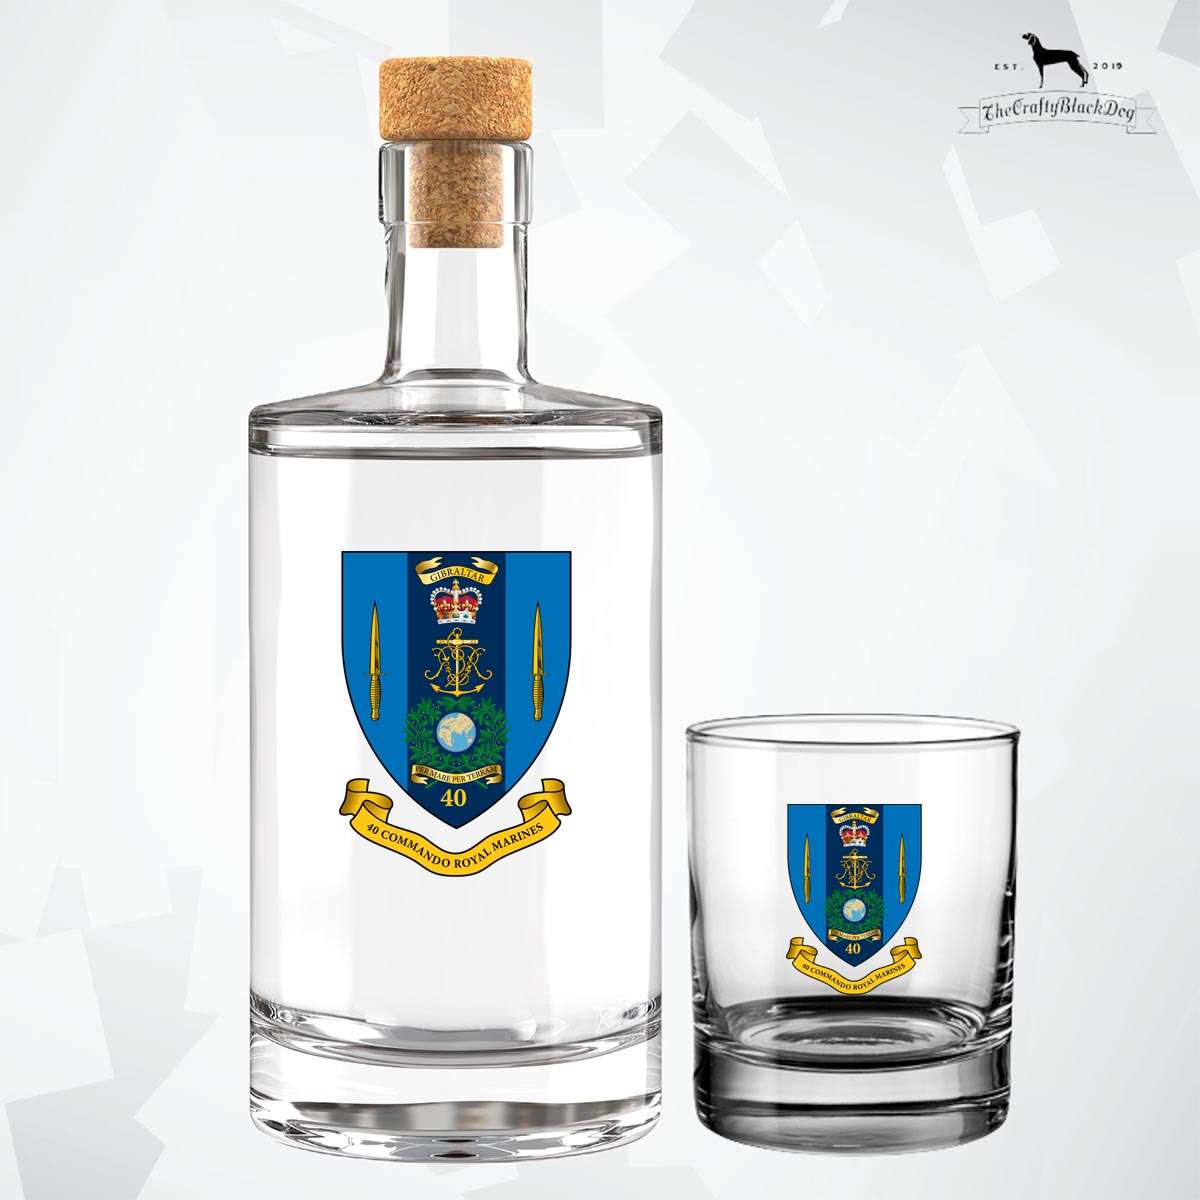 40 Cdo Royal Marines - Fill Your Own Spirit Bottle